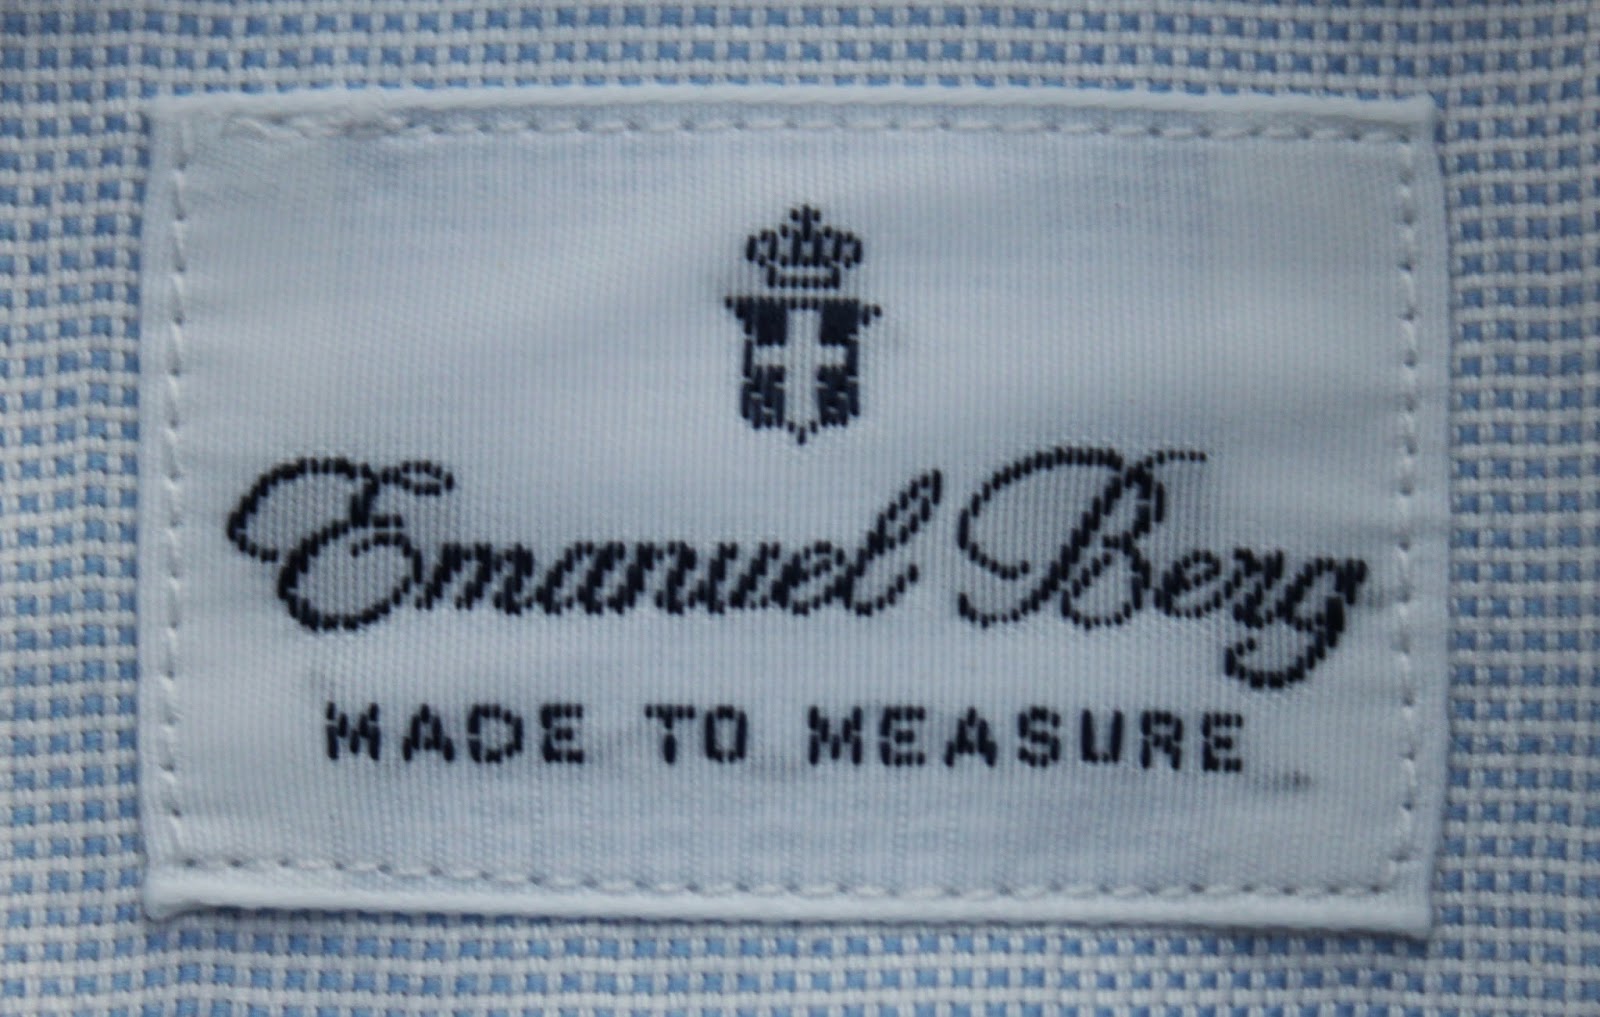 Emanuel Berg dress shirt